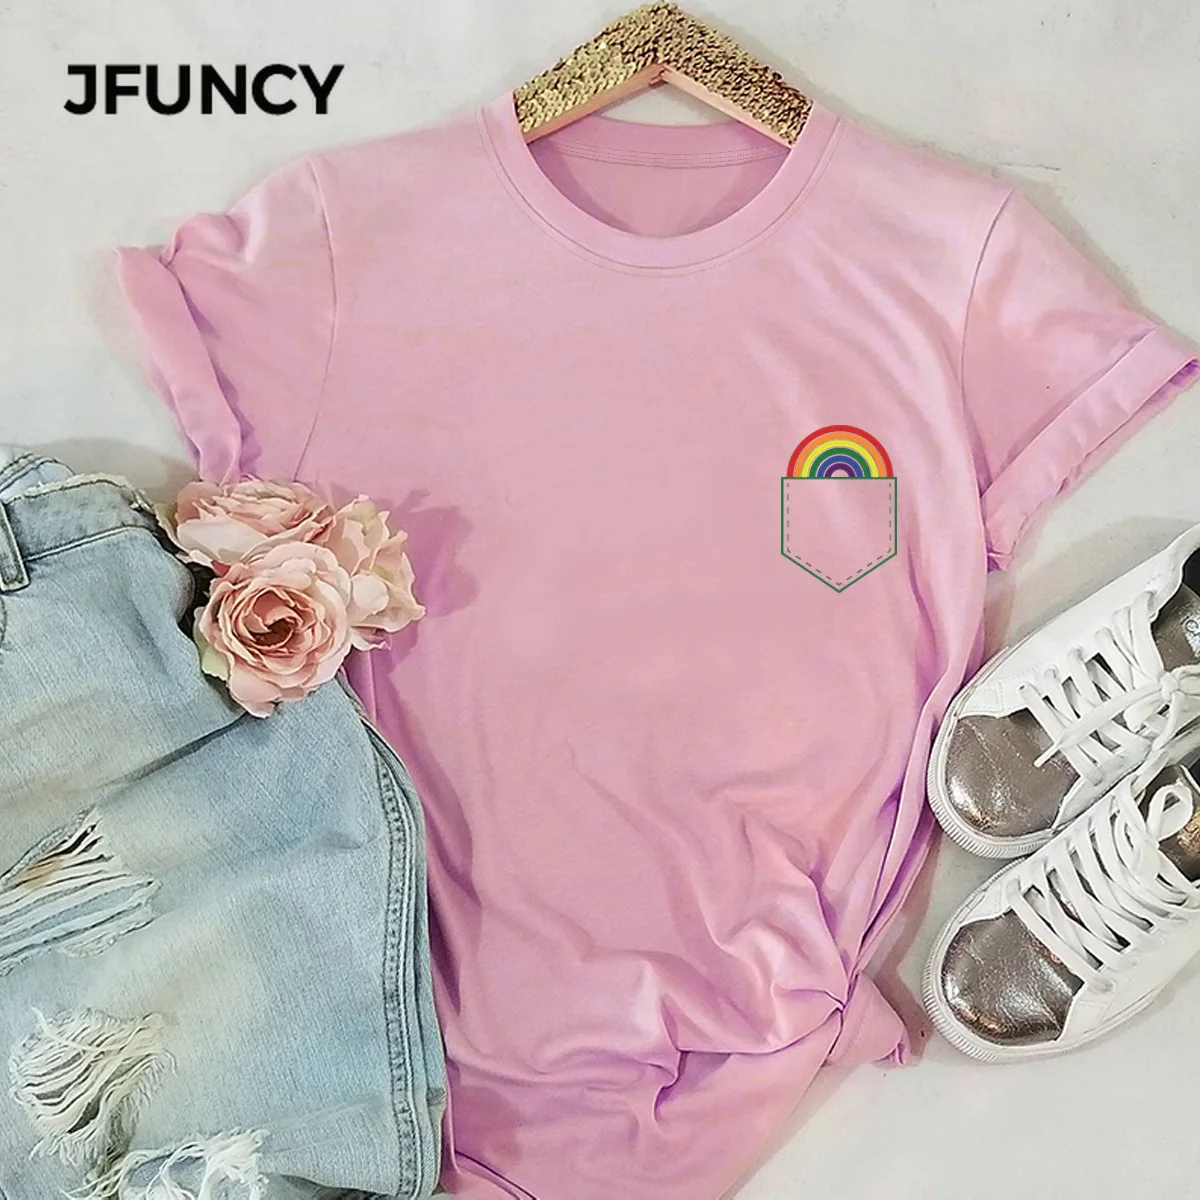 JFUNCY Rainbow Pocket Print  Short Sleeve Woman Tshirts Women T Shirt Casual Loose T-shirt Summer Tees 100% Cotton Tops